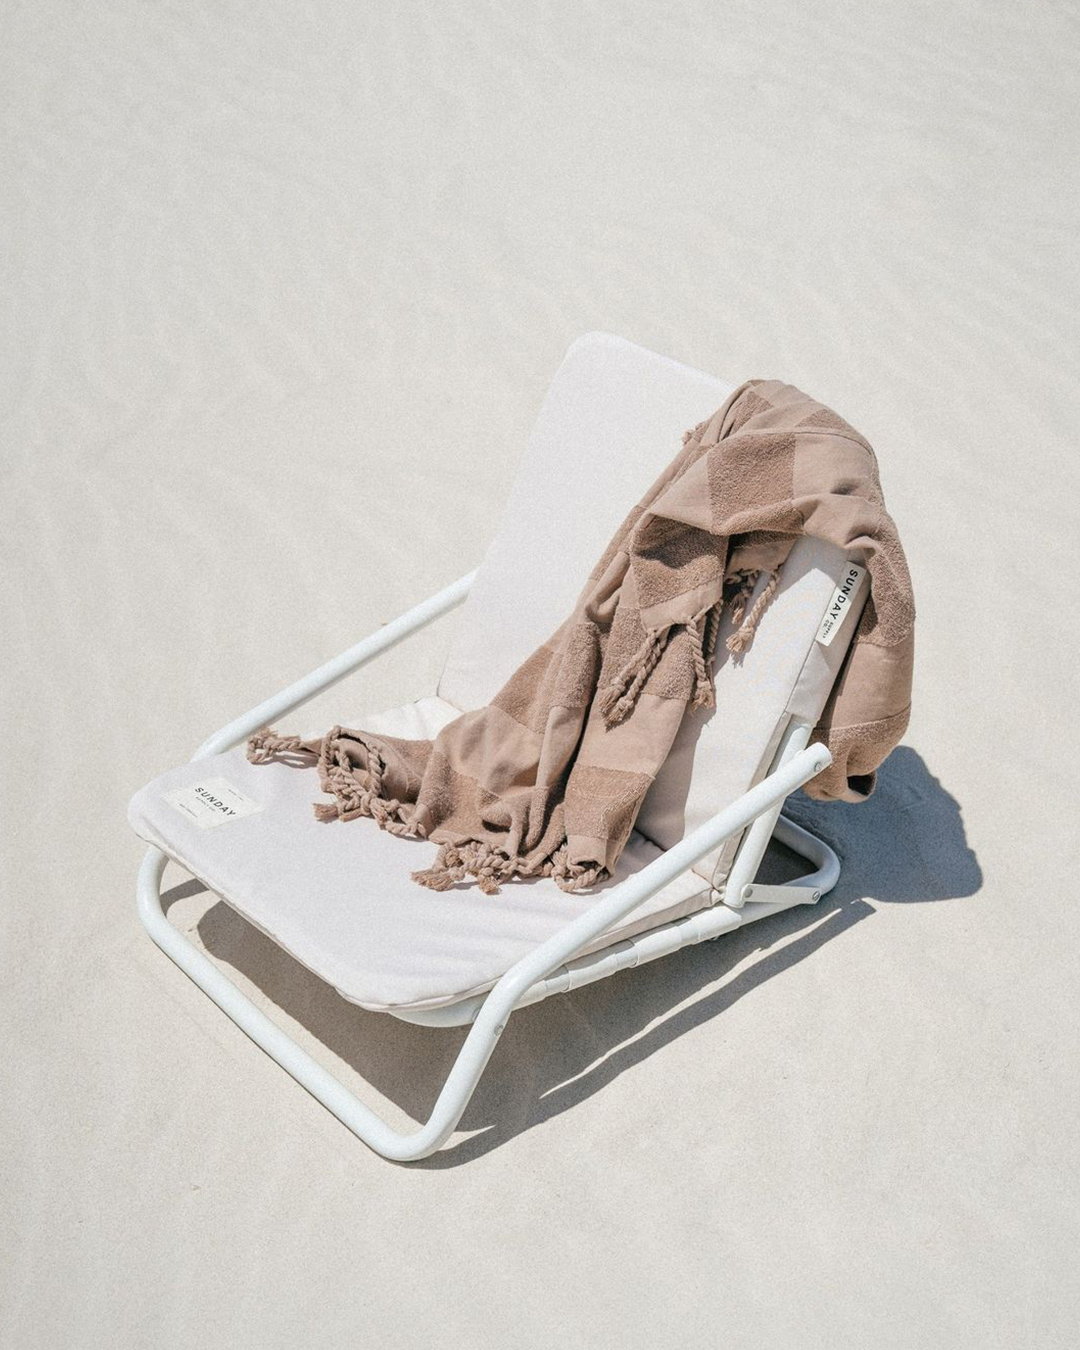 Dunes Folding Beach Chair by Sunday Supply Co.